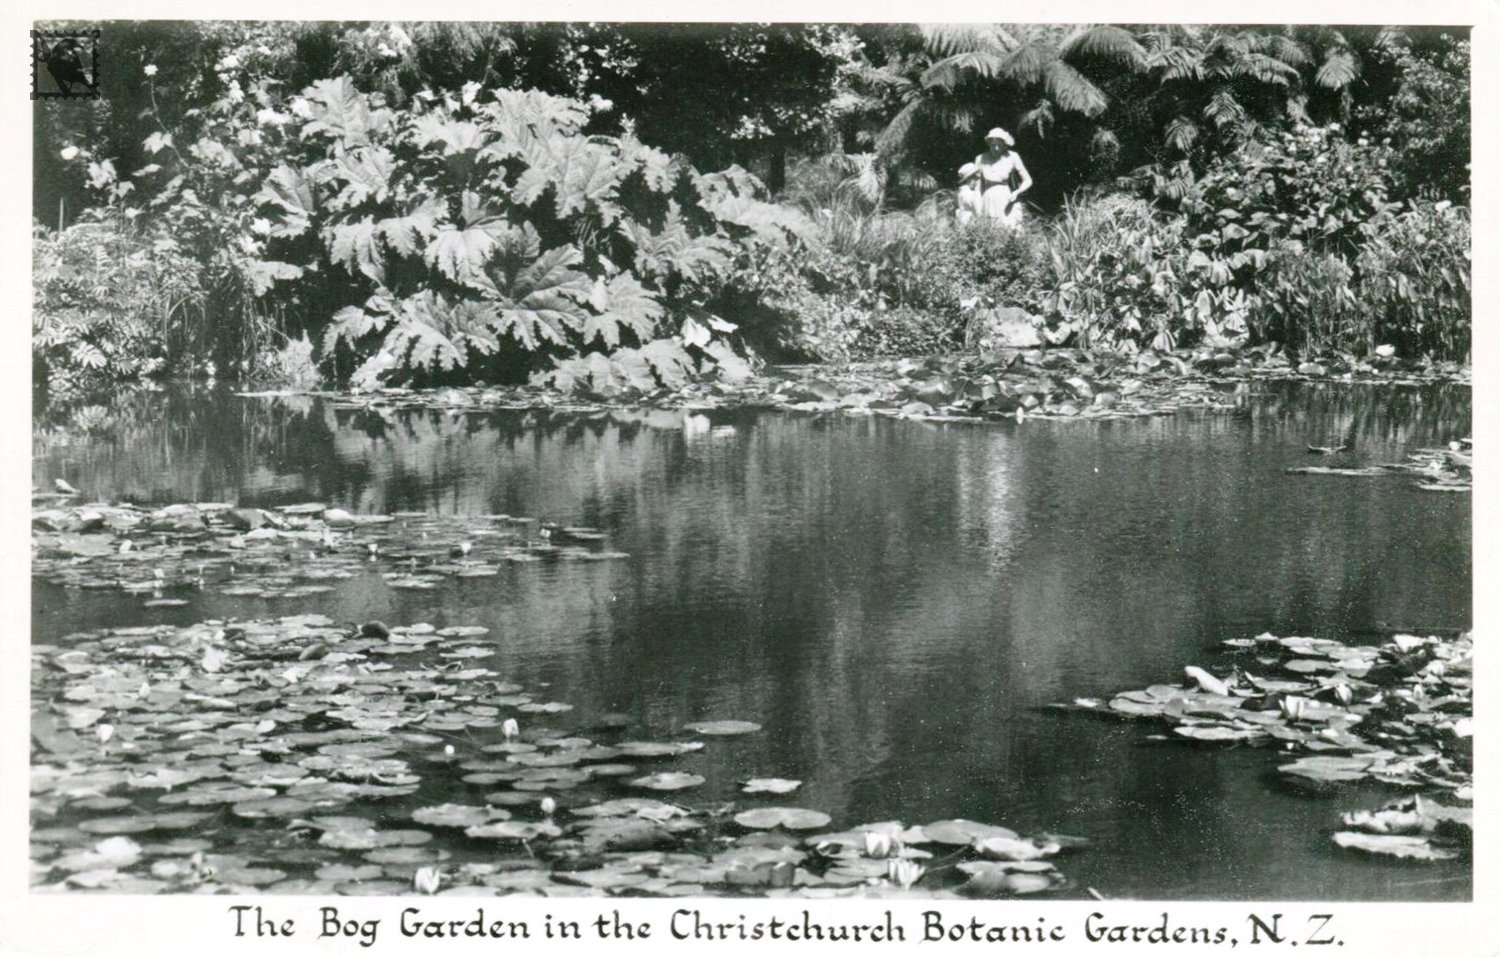 Christchurch Botanic Gardens - The Bog Garden